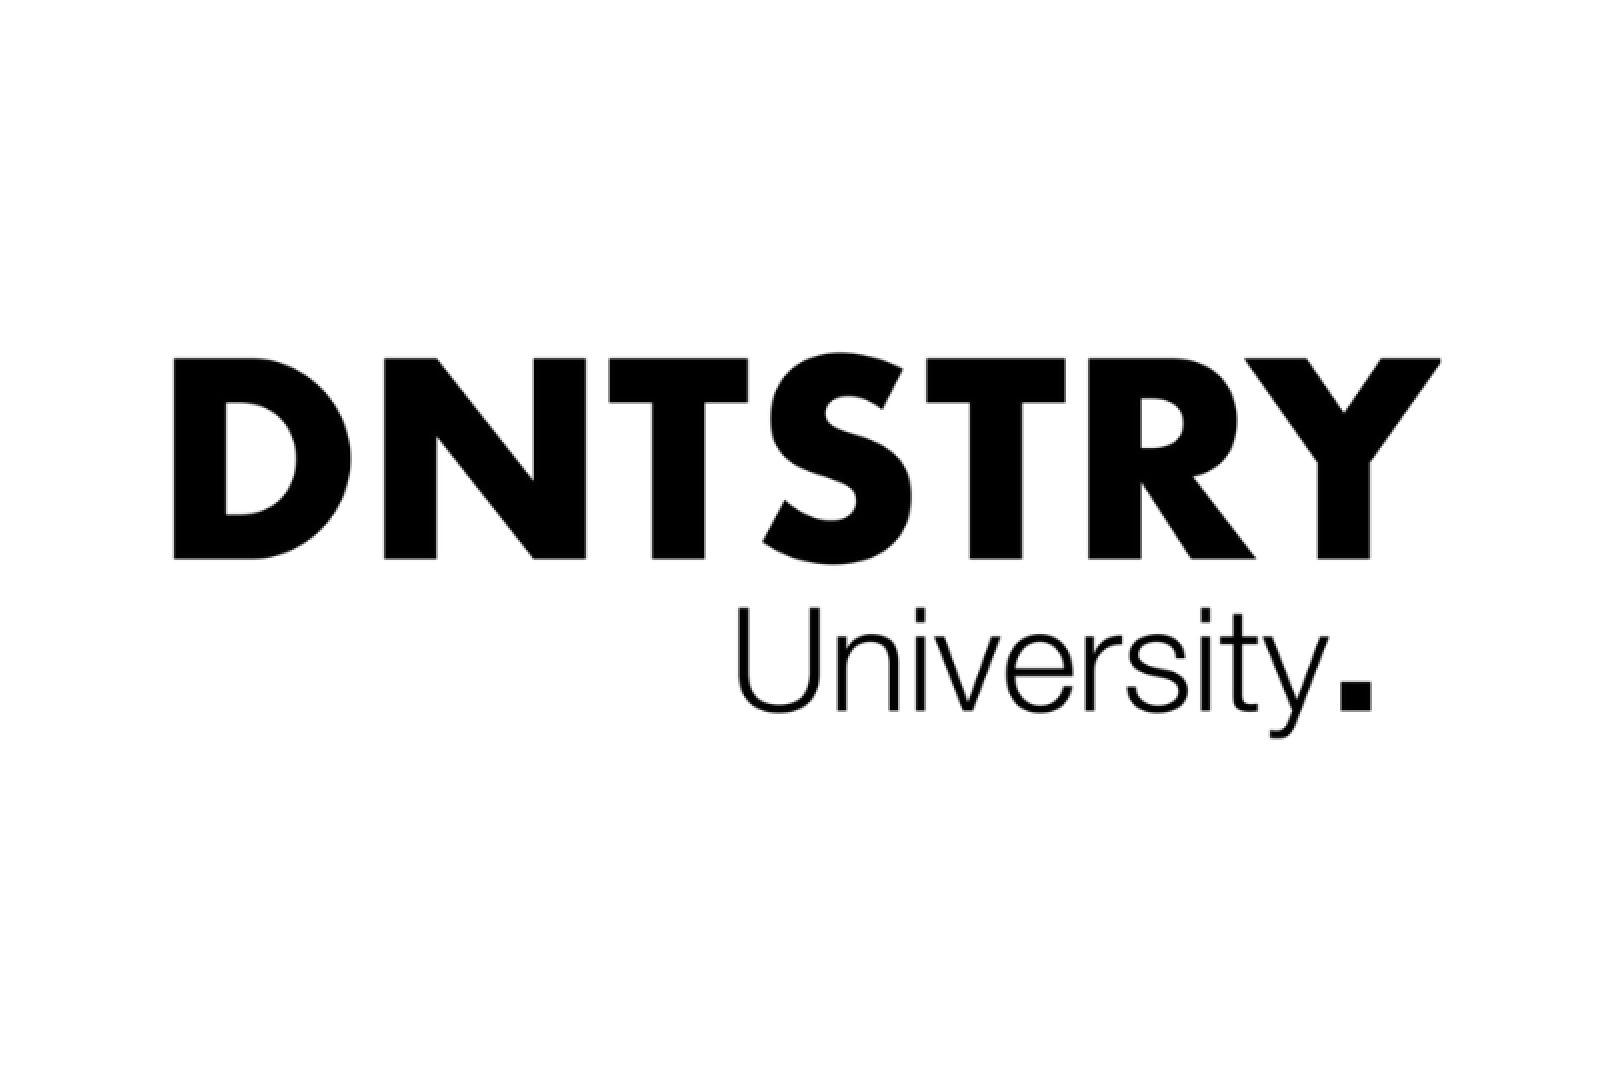 DNTSTRY University